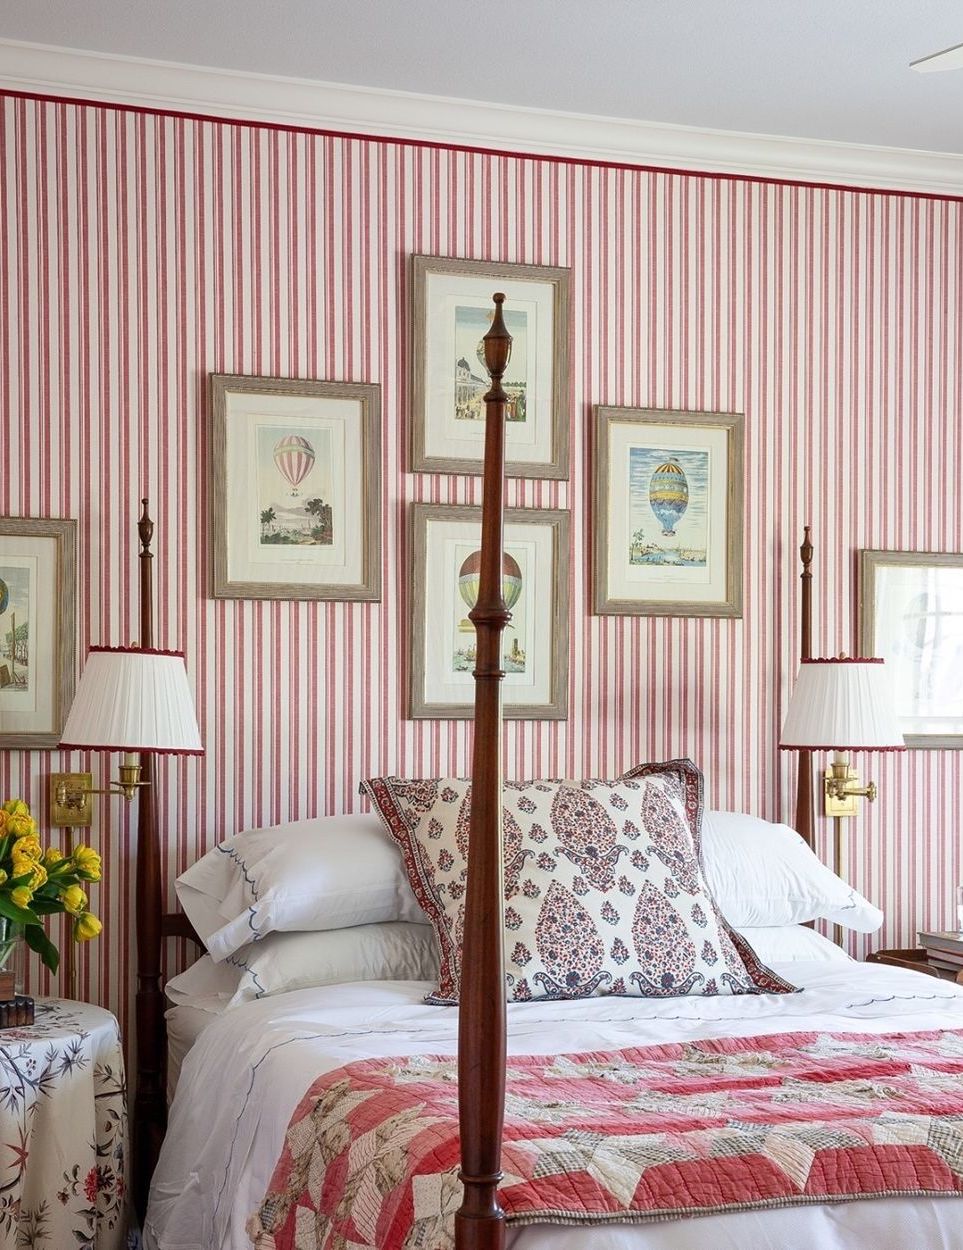 Striped walls in bedroom markdsikes_interiors